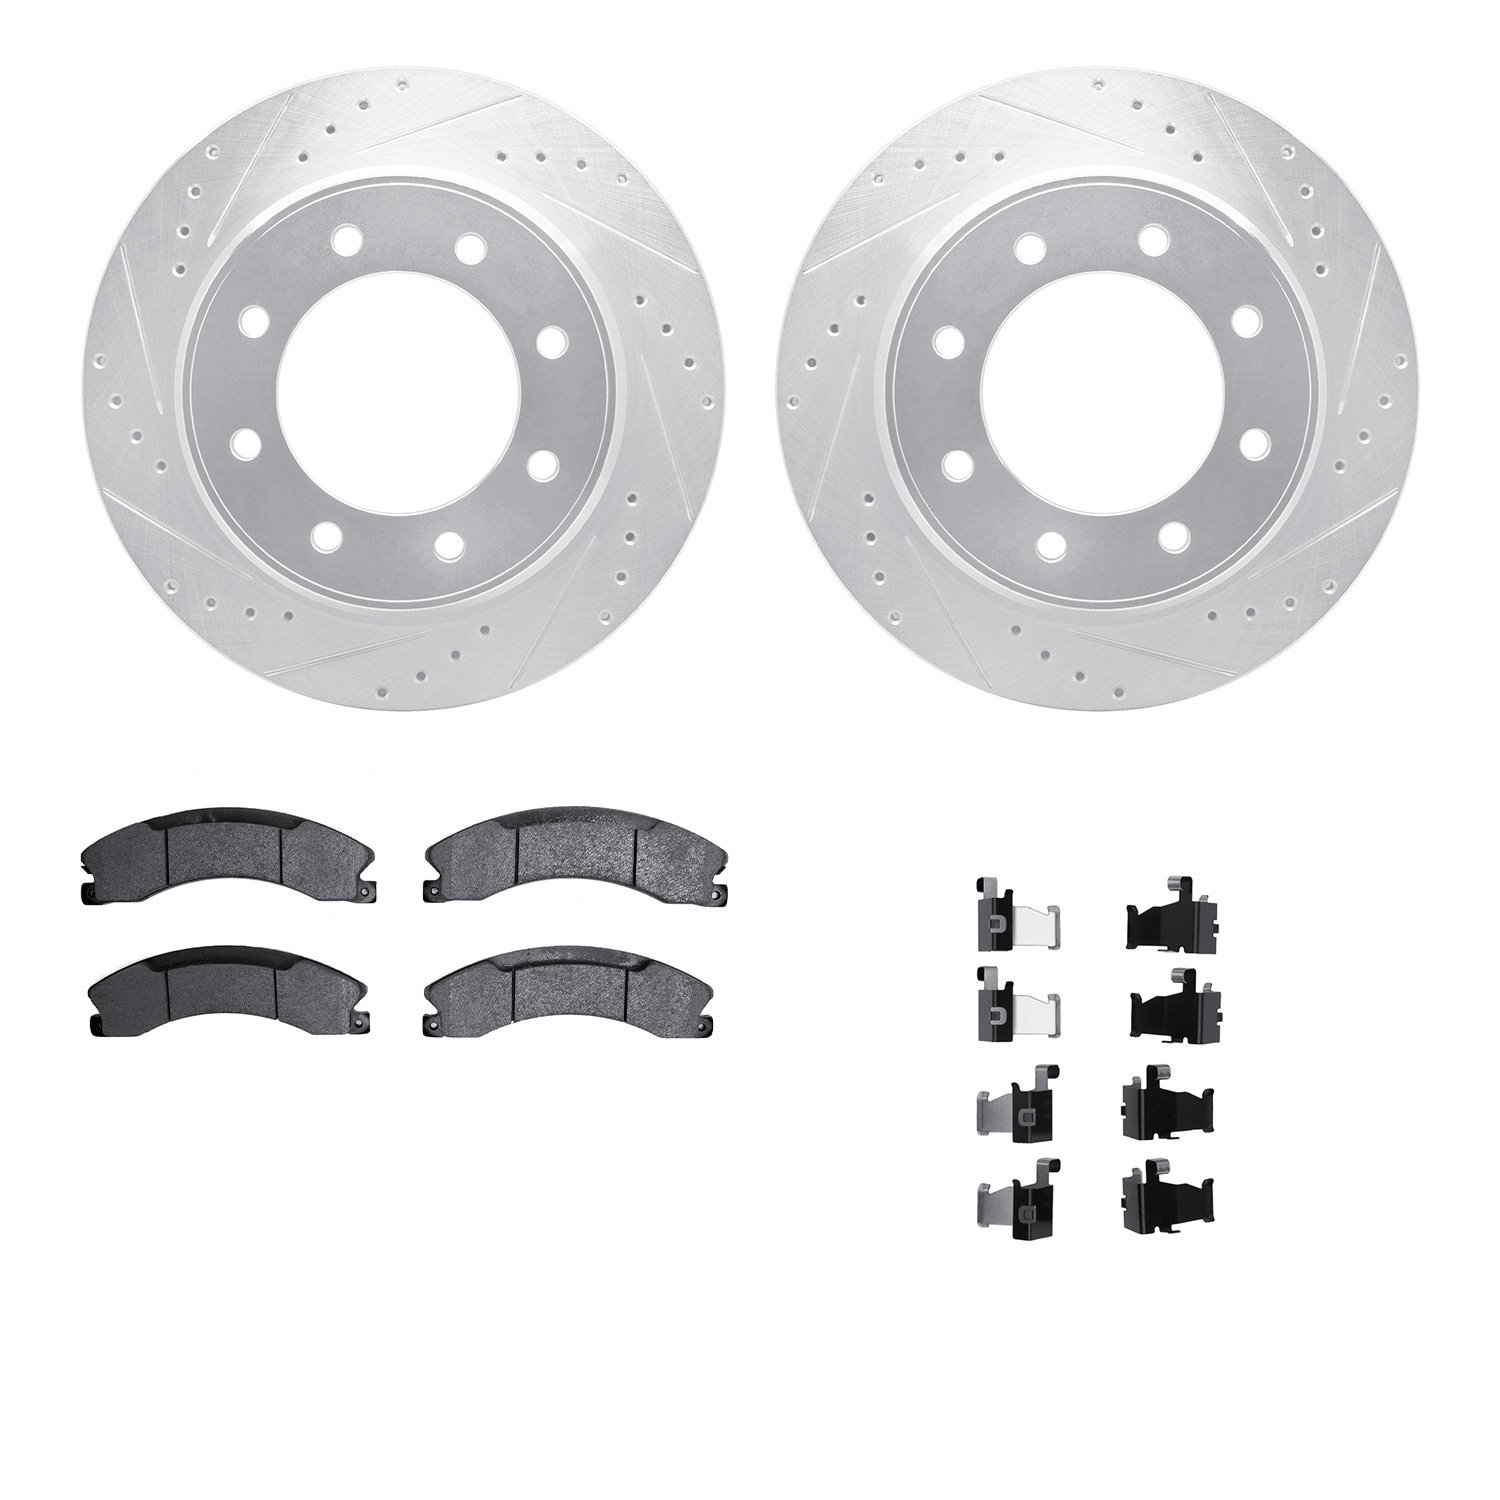 7412-67006 Drilled/Slotted Brake Rotors with Ultimate-Duty Brake Pads Kit & Hardware [Silver], 2012-2021 Infiniti/Nissan, Positi